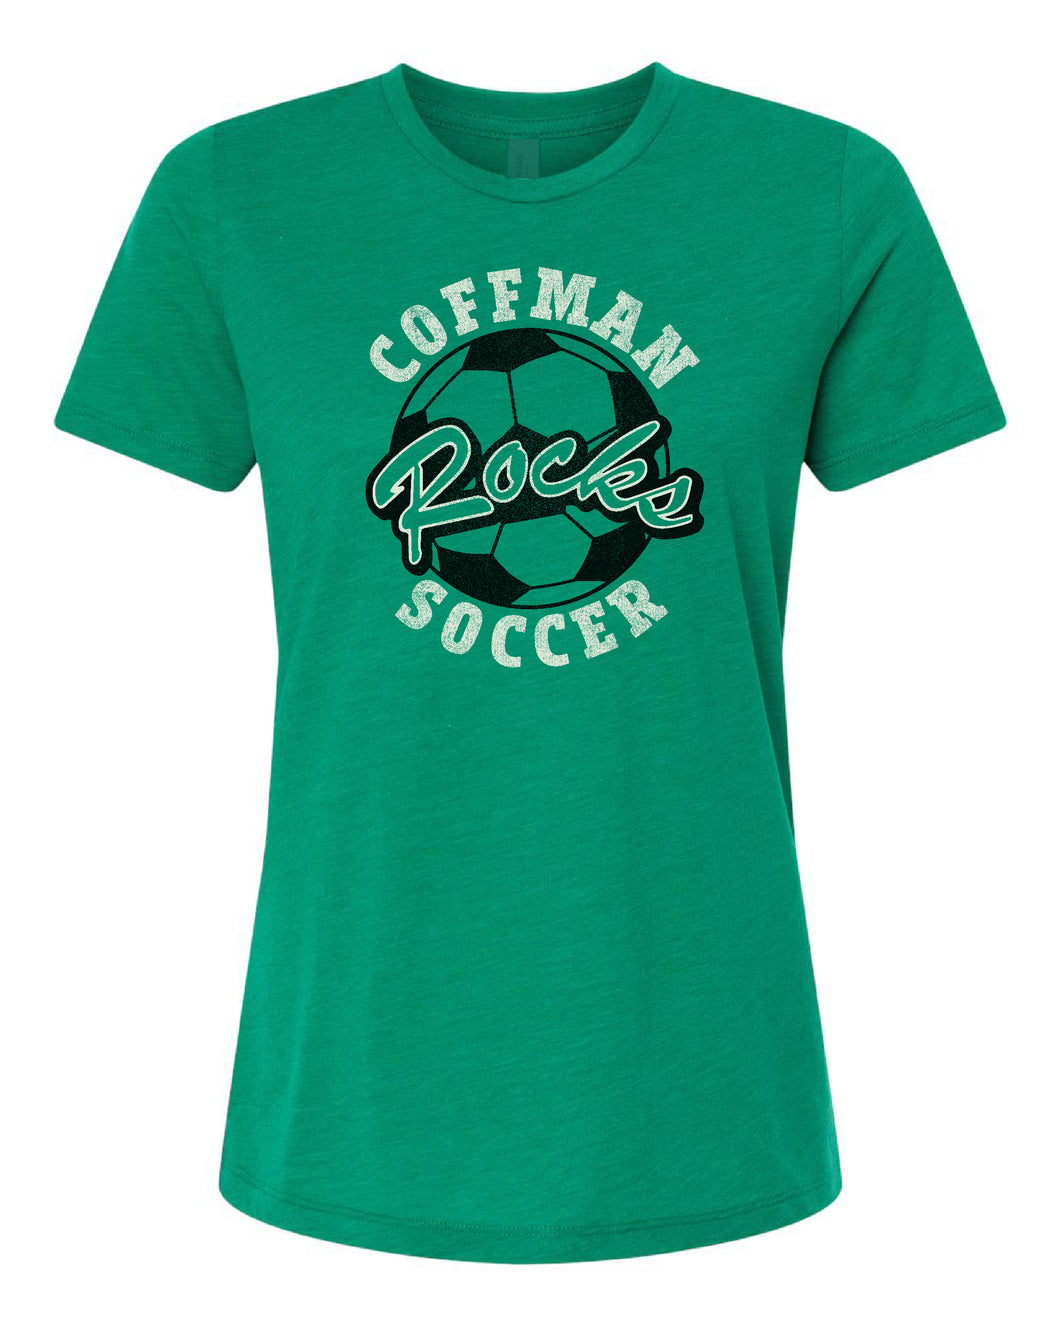 Coffman Soccer Womens Tee | Adult